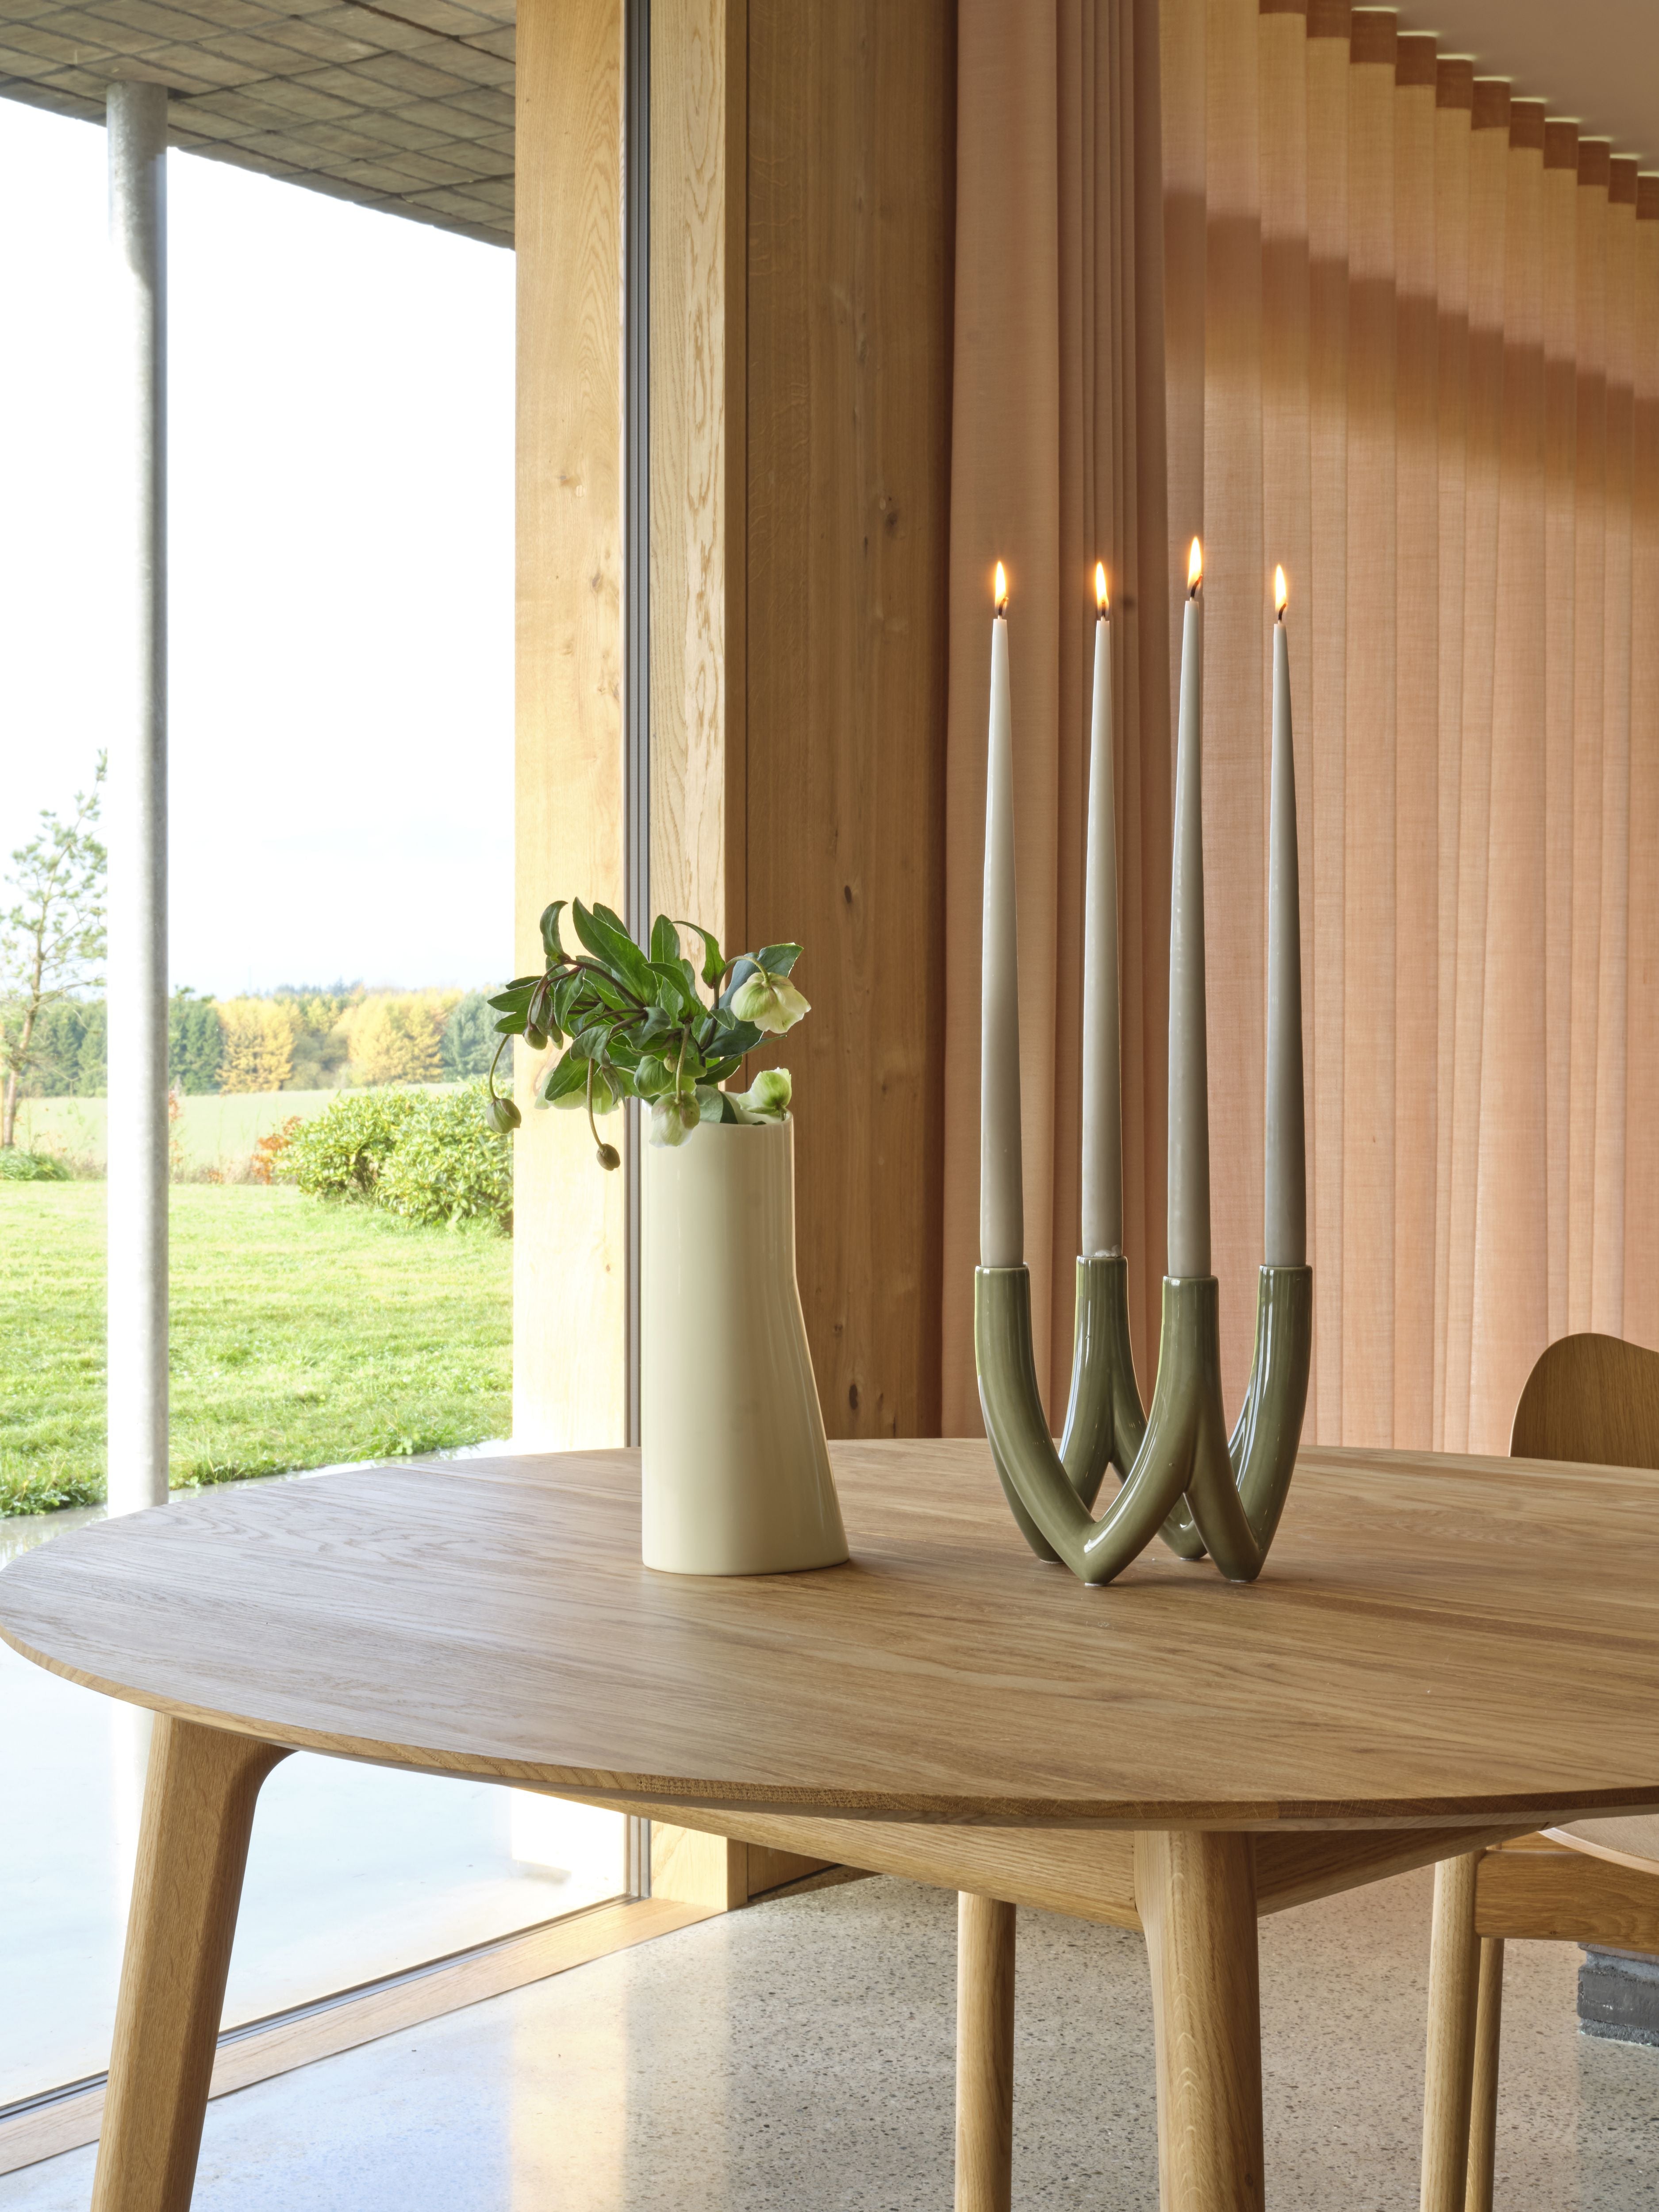 RO Collection Salon Table extensible en chêne huilé, Ø 120 cm